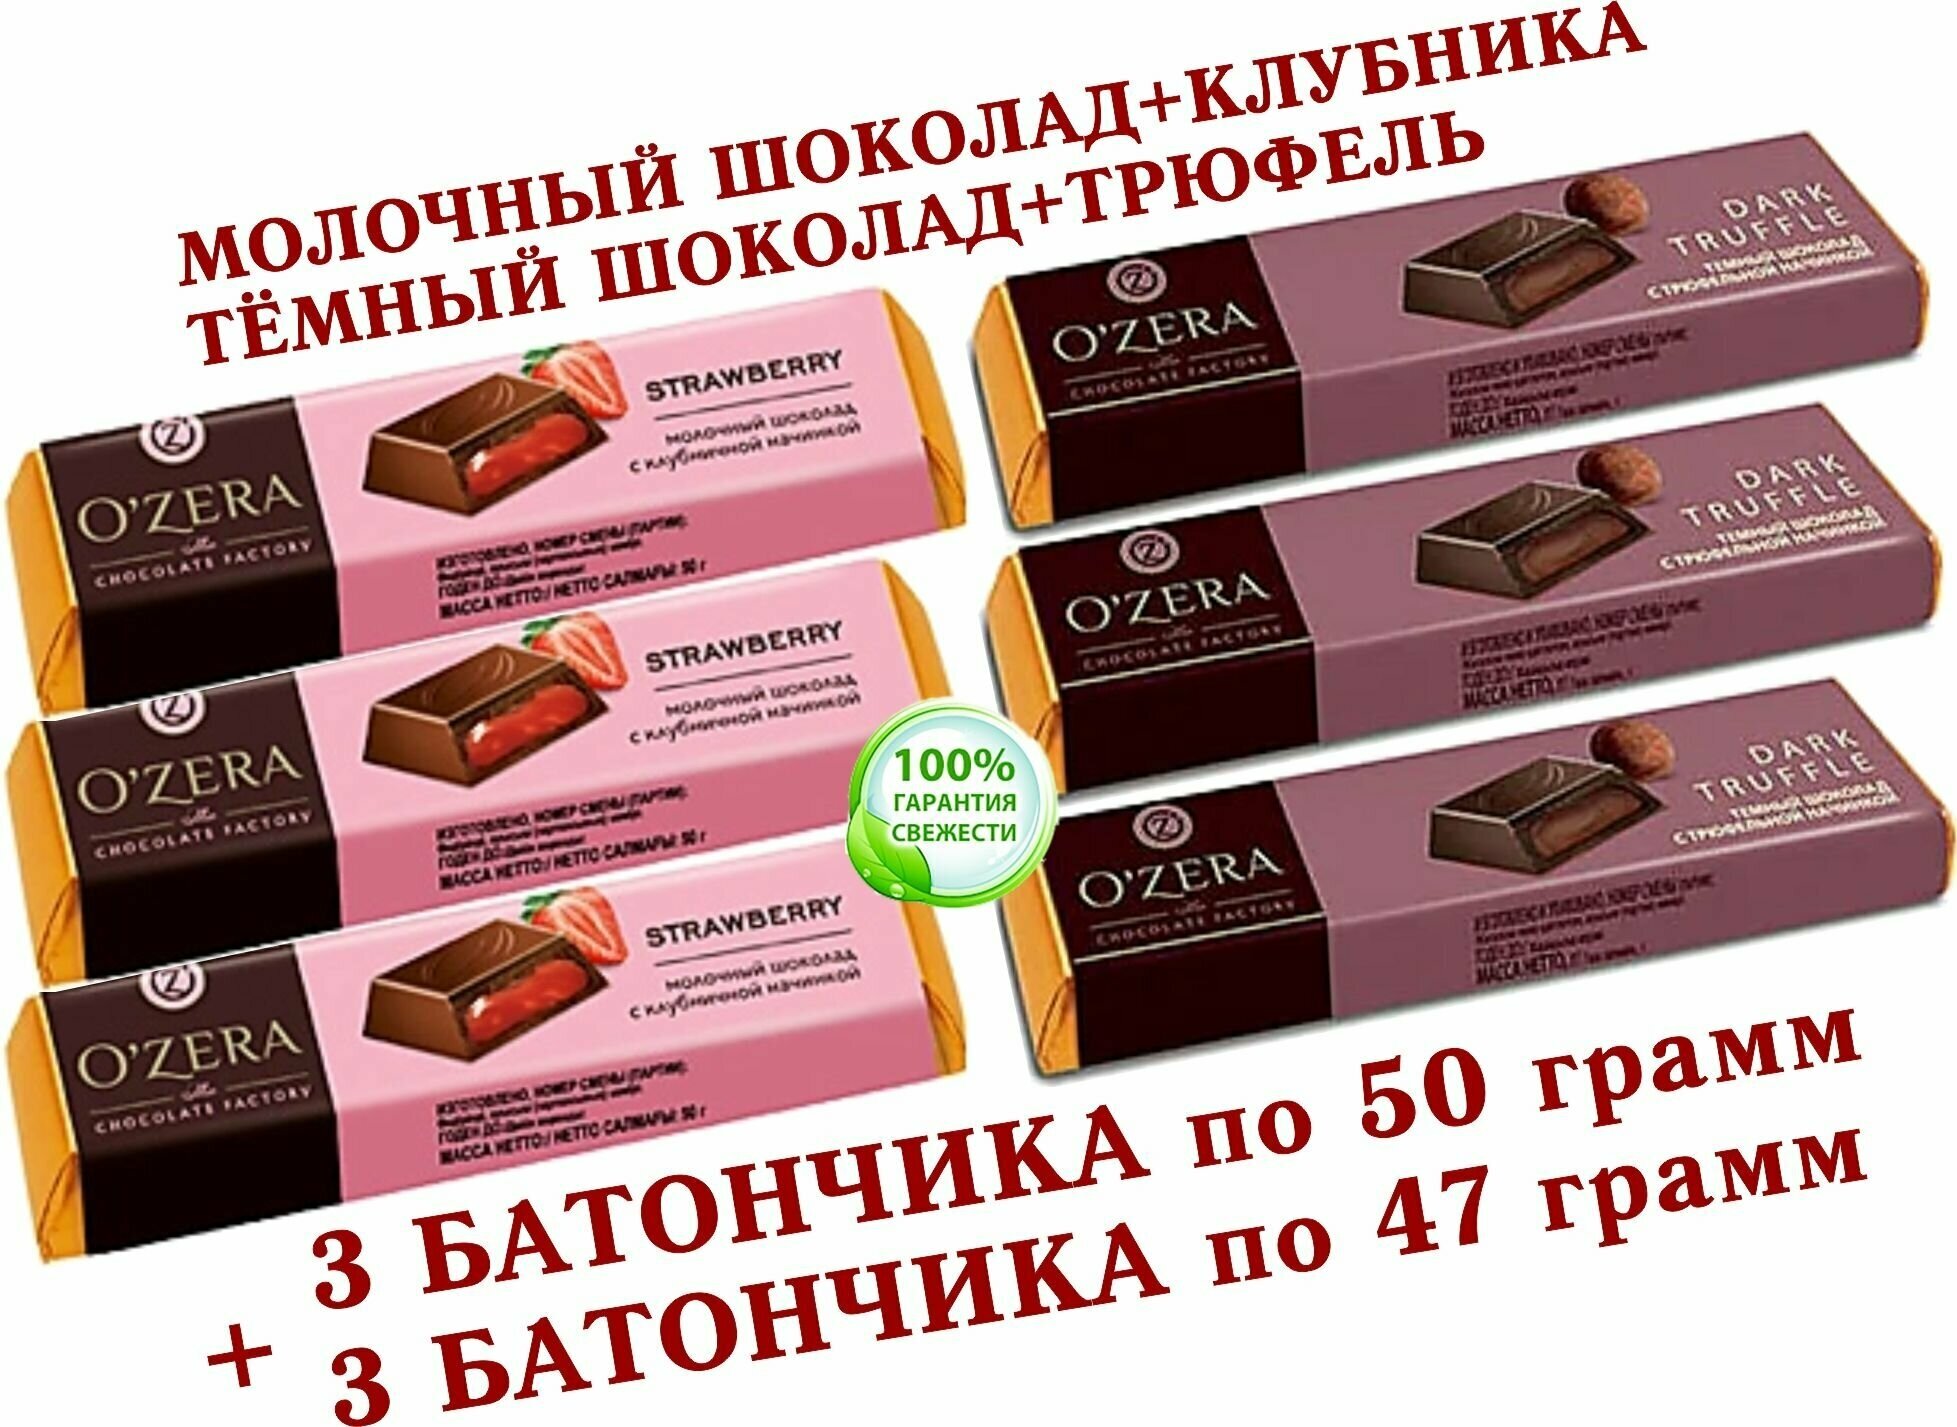 Шоколадный батончик OZera, микс клубника "Strawberry"/трюфельная начинка "Dark Truffle", КDV "Озёрский сувенир" - 3 по 50 грамм + 3 по 47 грамм